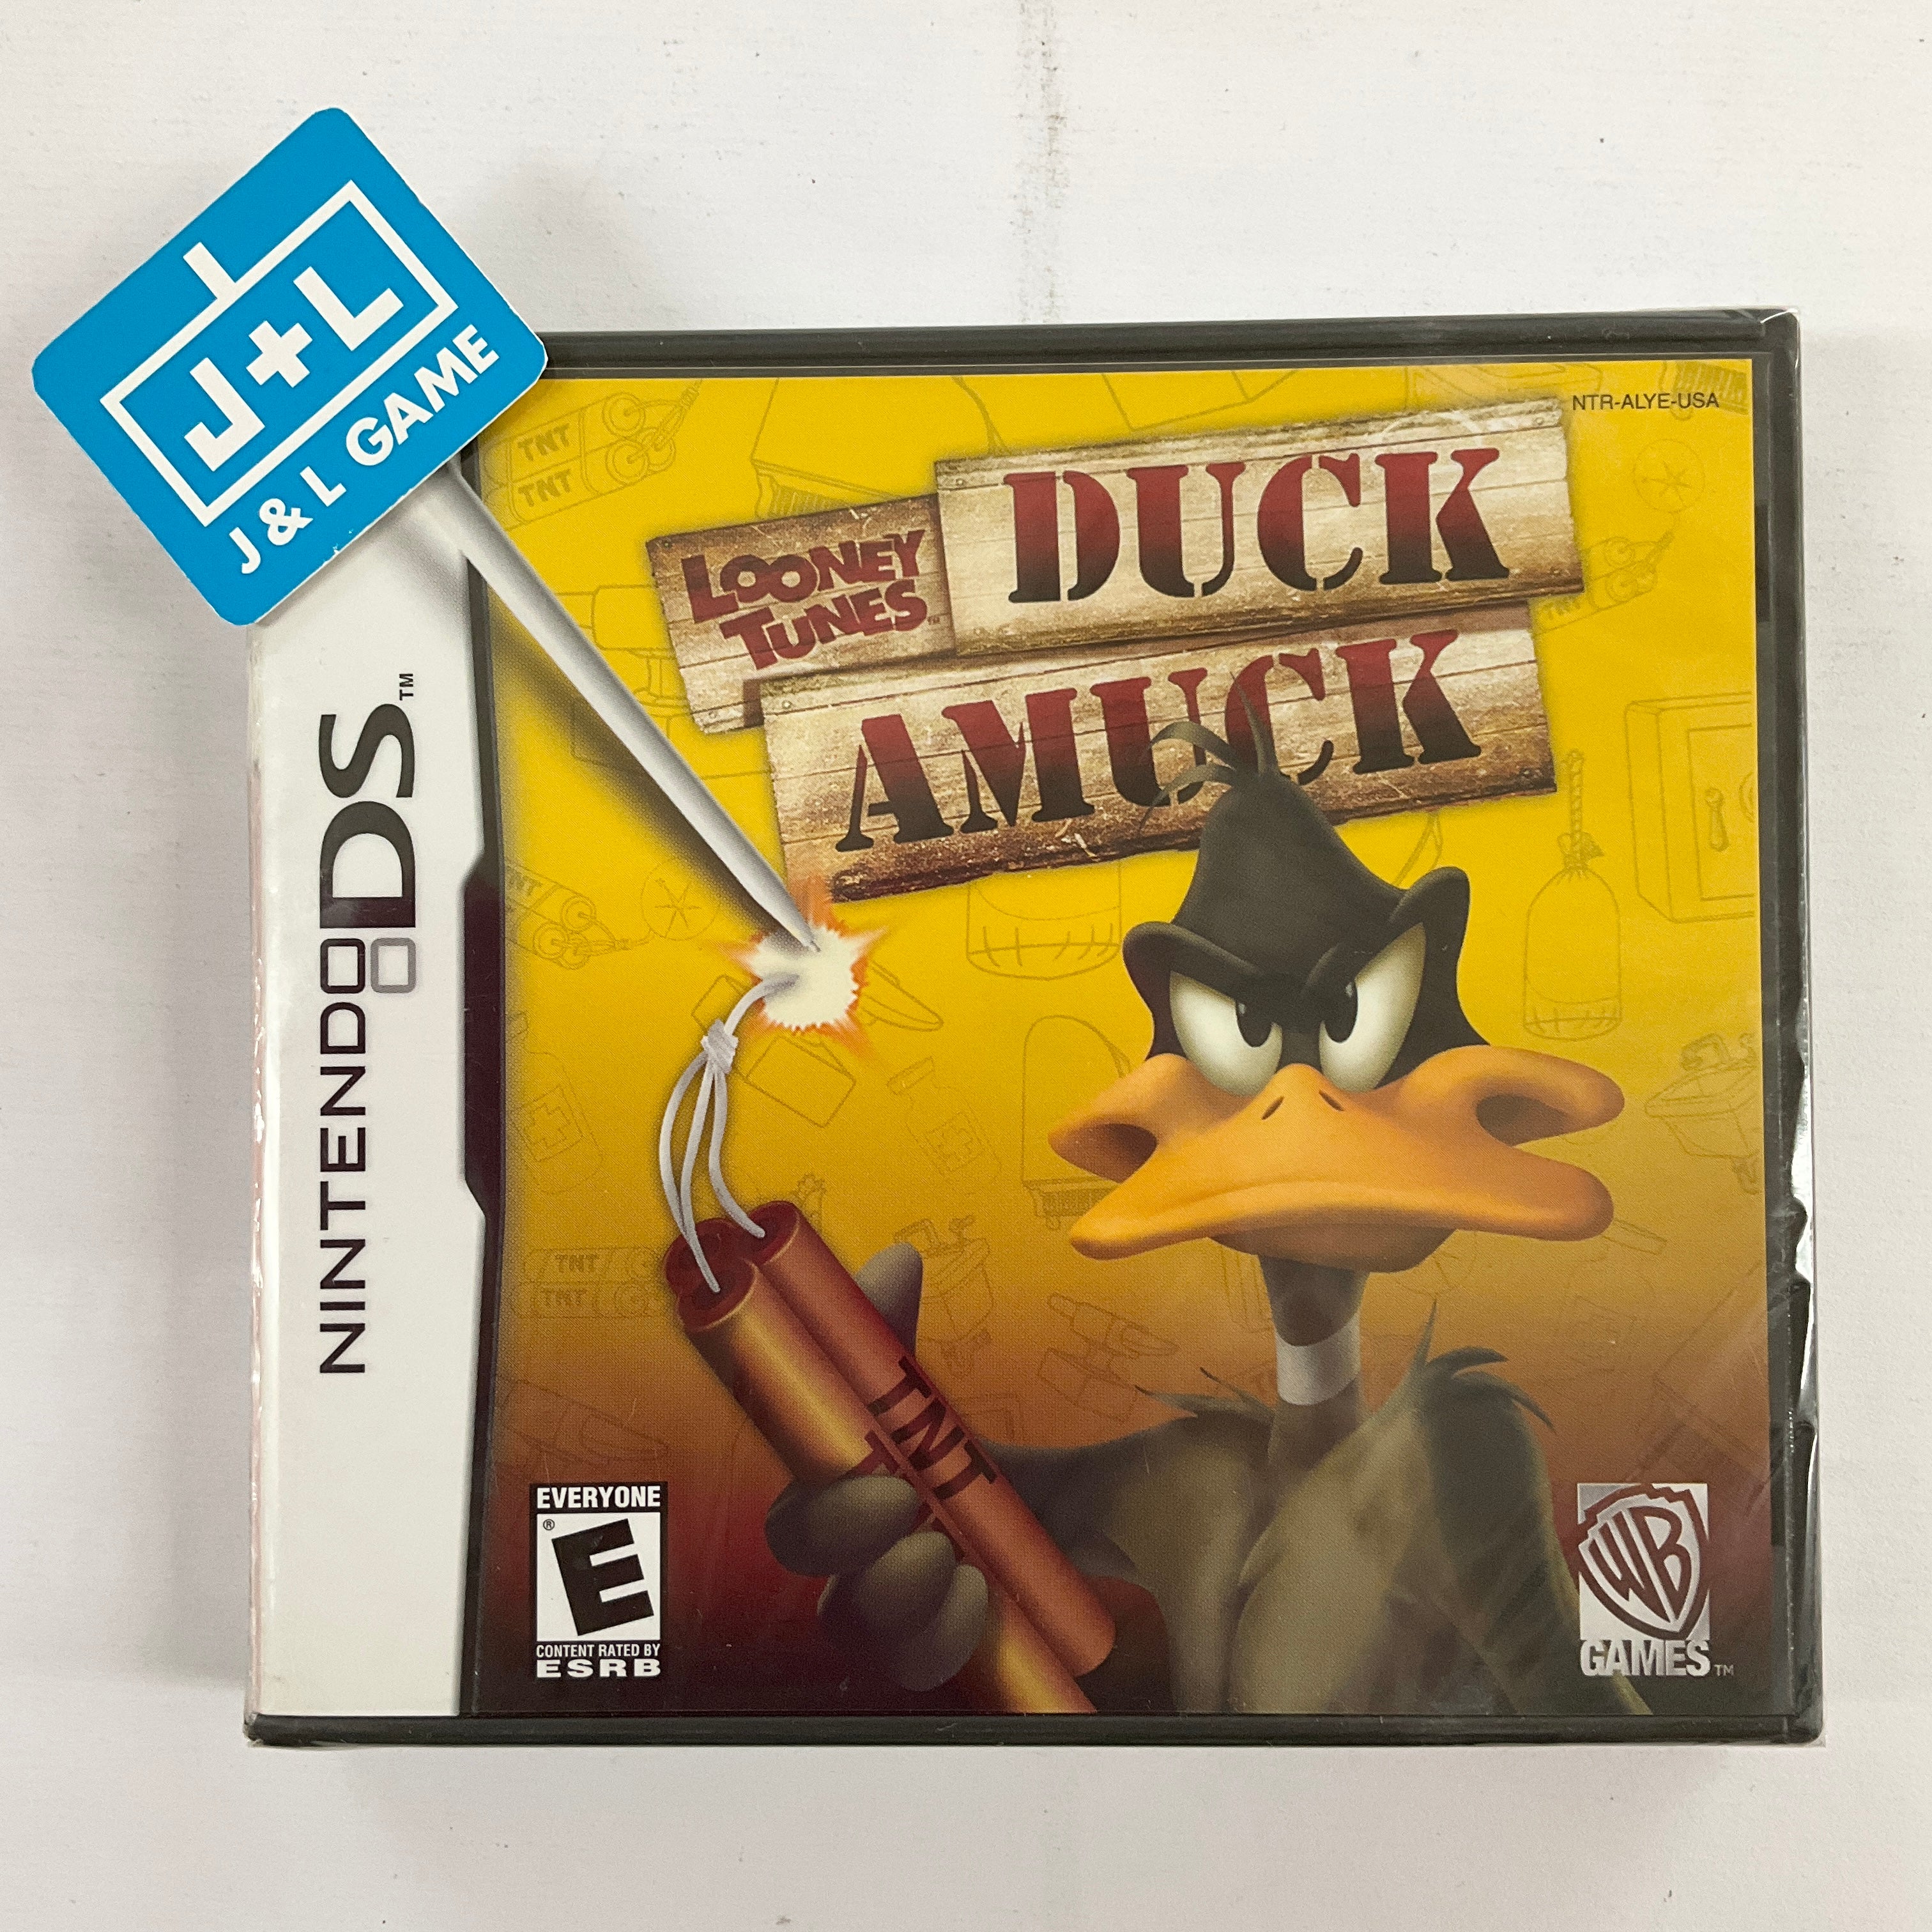 Looney Tunes: Duck Amuck - (NDS) Nintendo DS Video Games Warner Bros. Interactive Entertainment   